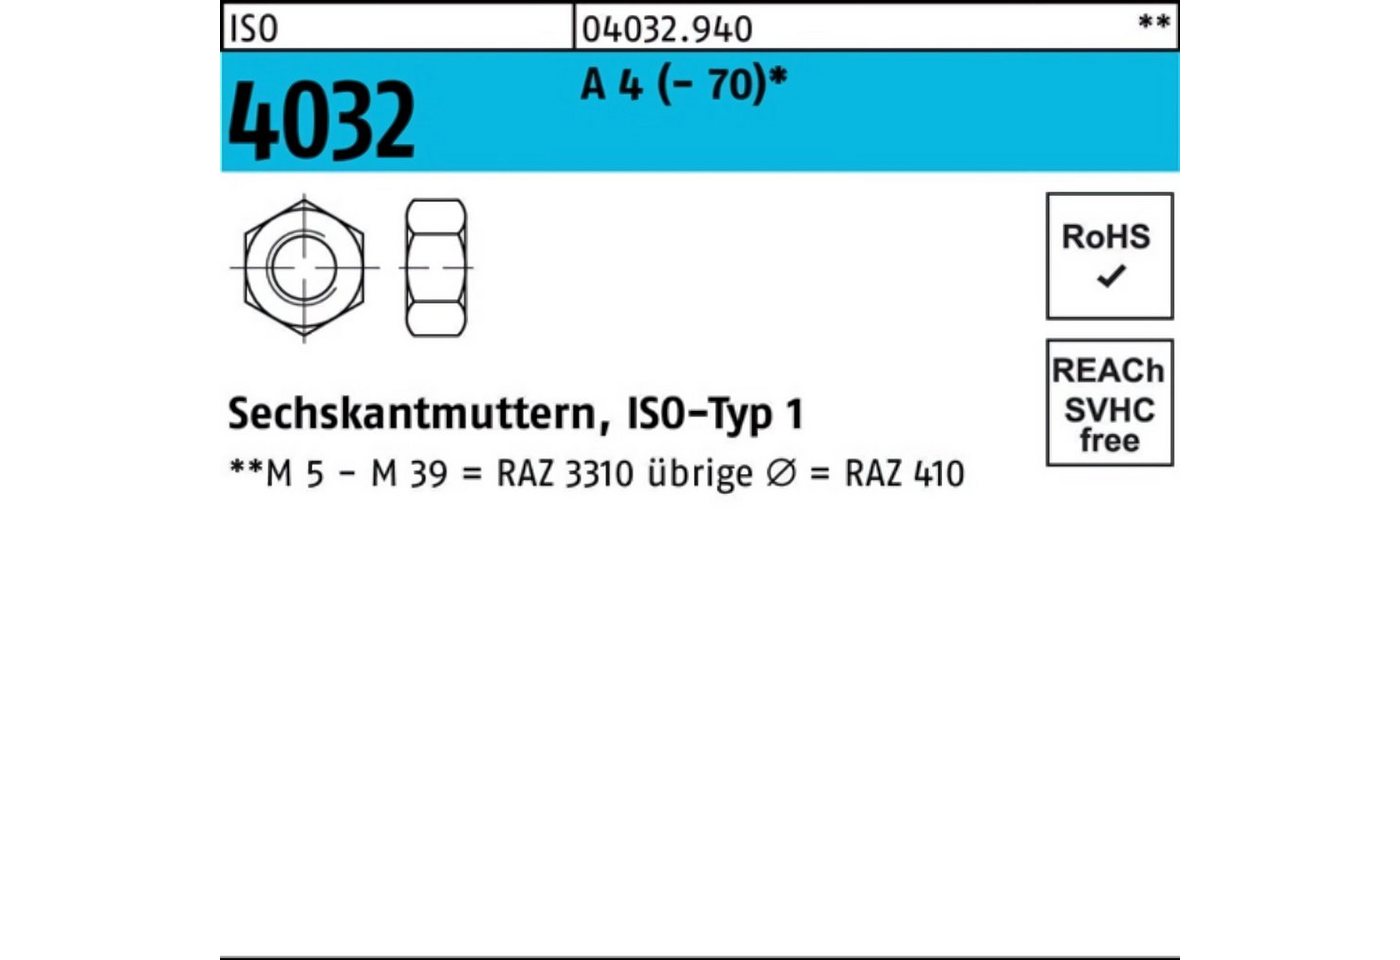 Bufab Muttern 250er Pack Sechskantmutter ISO 4032 M12 A 4 (70) 250 Stück ISO 4032 von Bufab